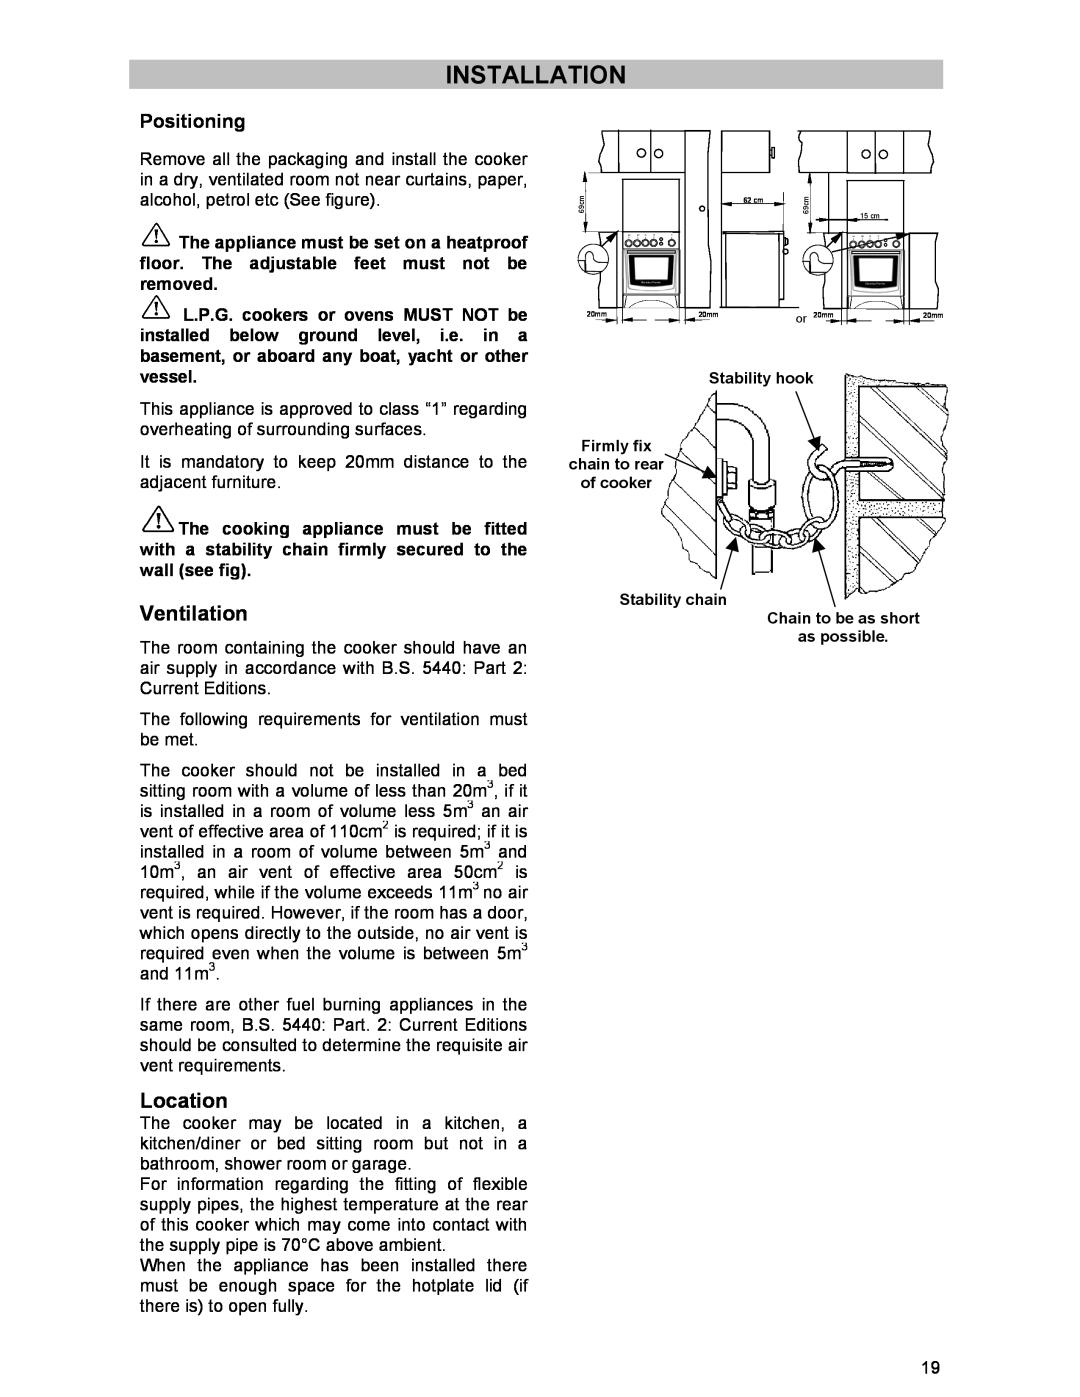 Electrolux DSO51GA manual Installation, Ventilation, Location, Positioning 